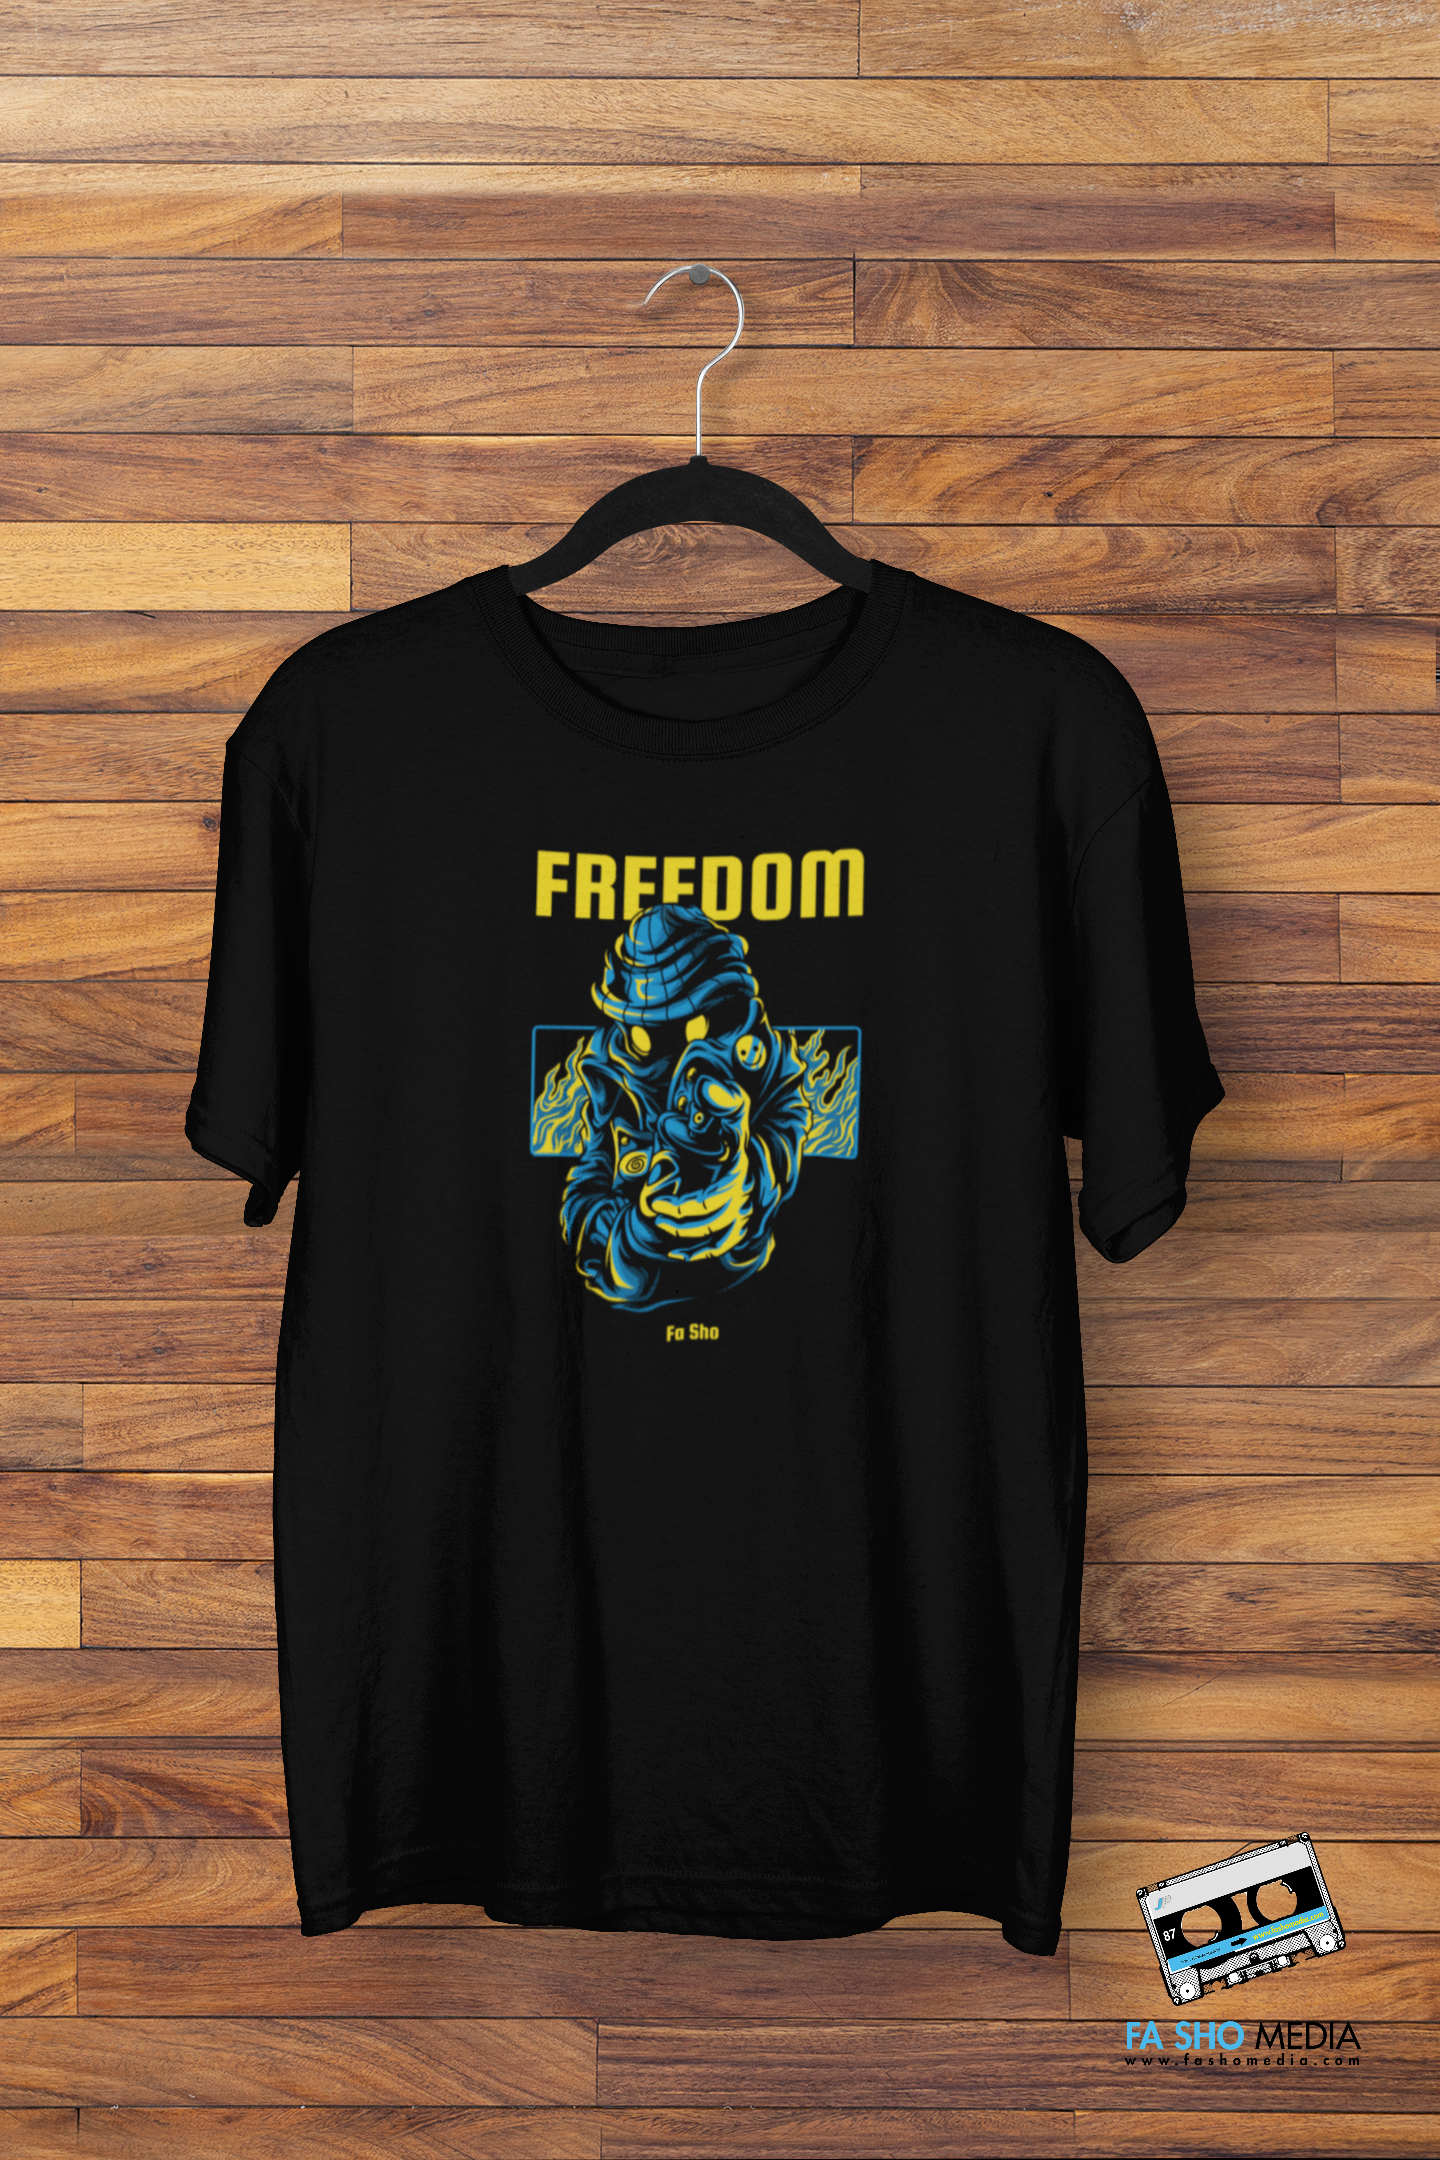 Freedom Fa Sho Shirt (Men's)